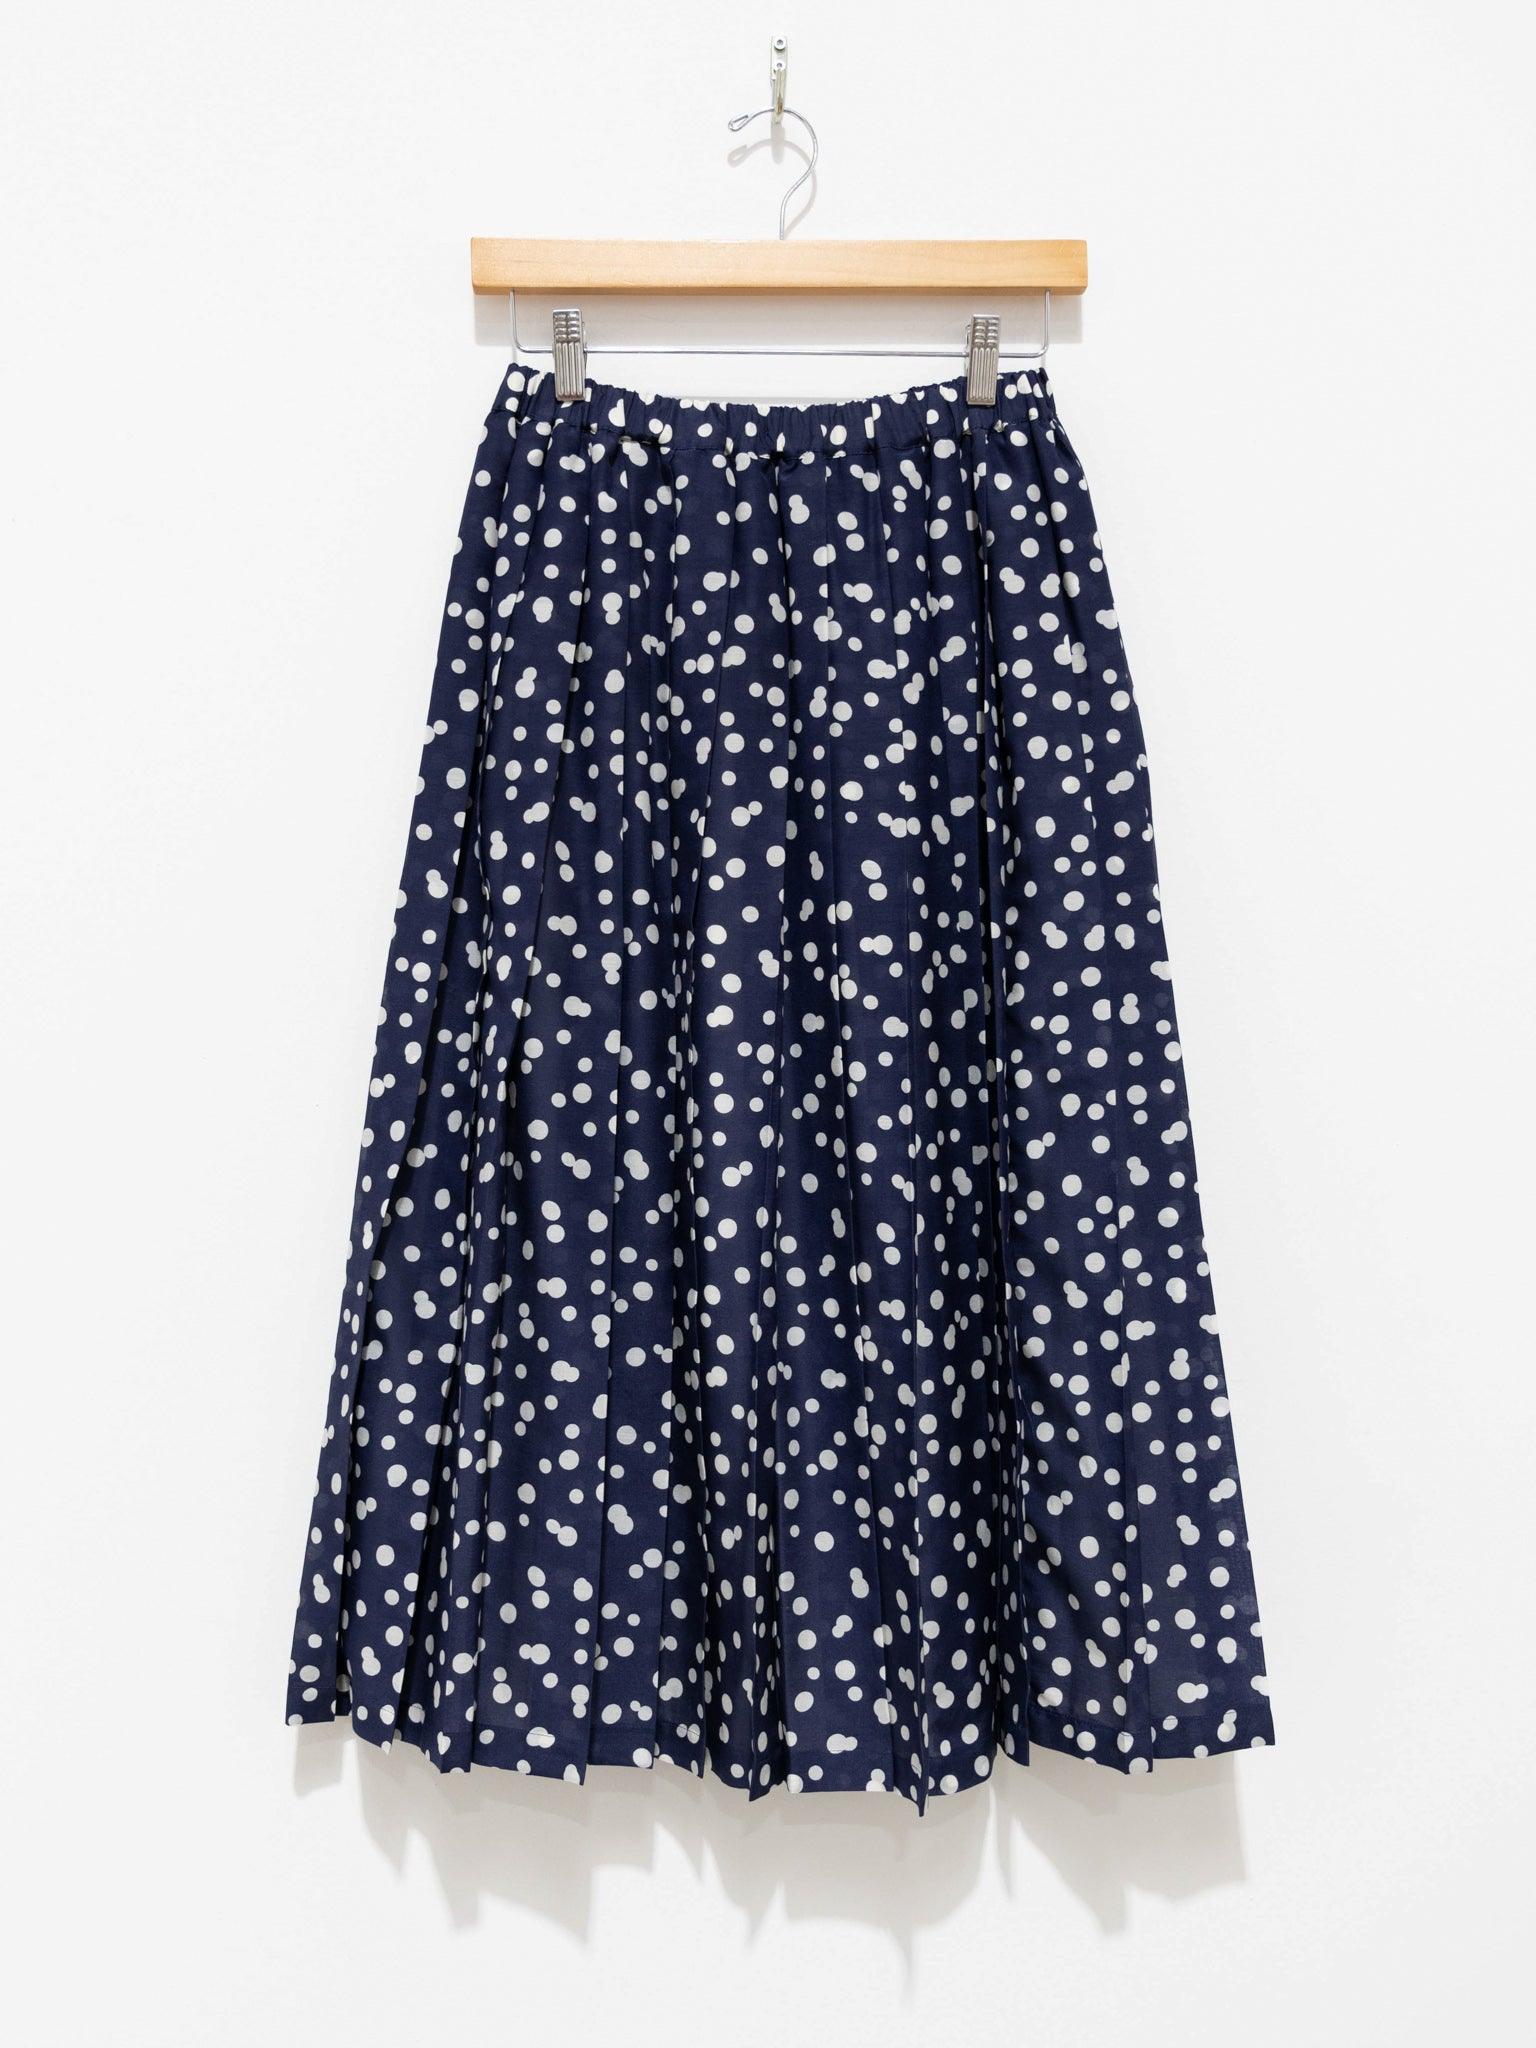 Namu Shop - Sara Lanzi Pleated Skirt - Polka Dots